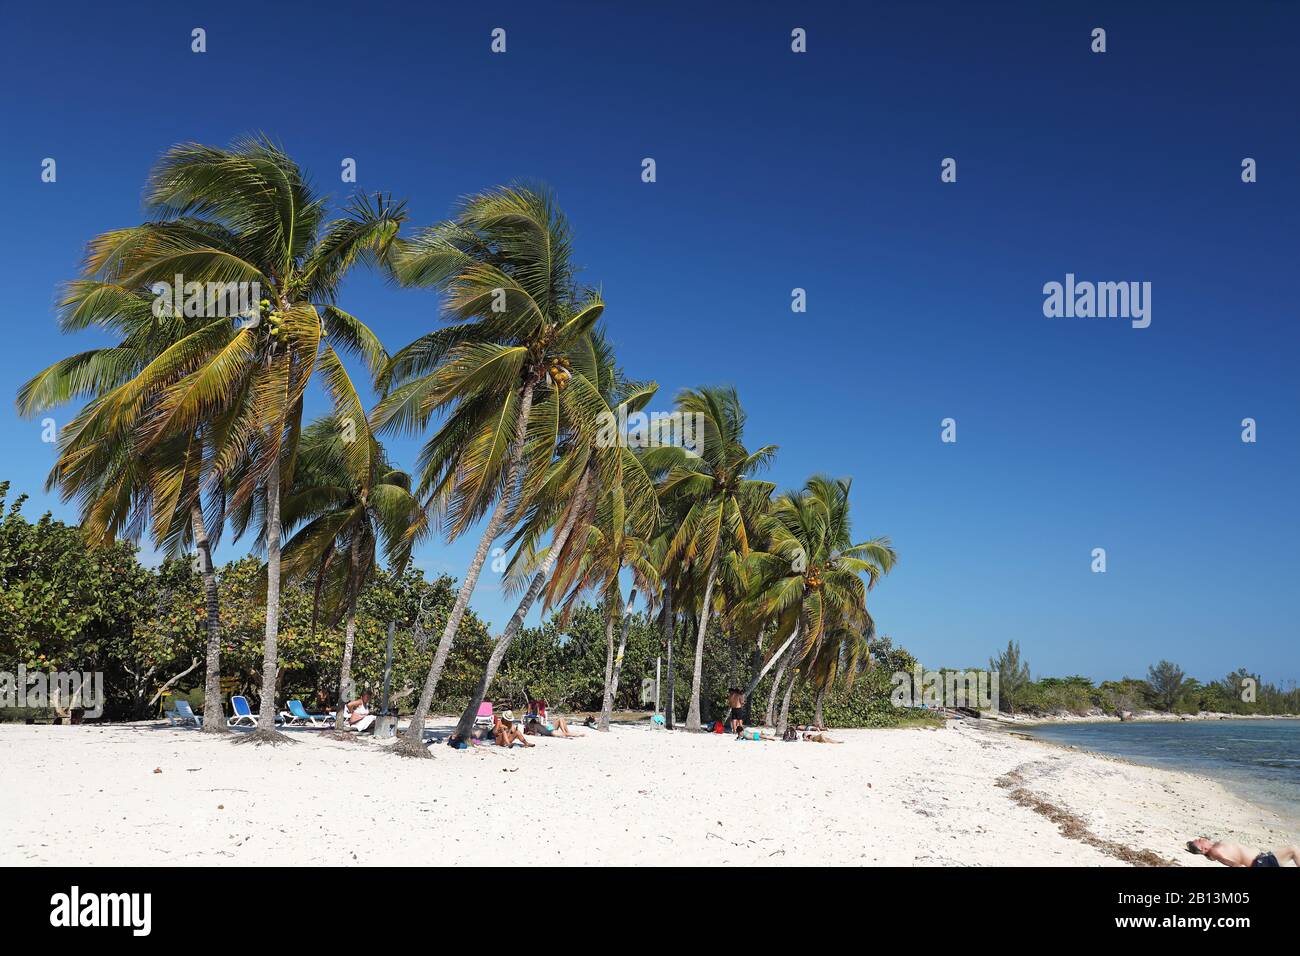 palm beach Playa Coco on Kuba, Cuba Stock Photo